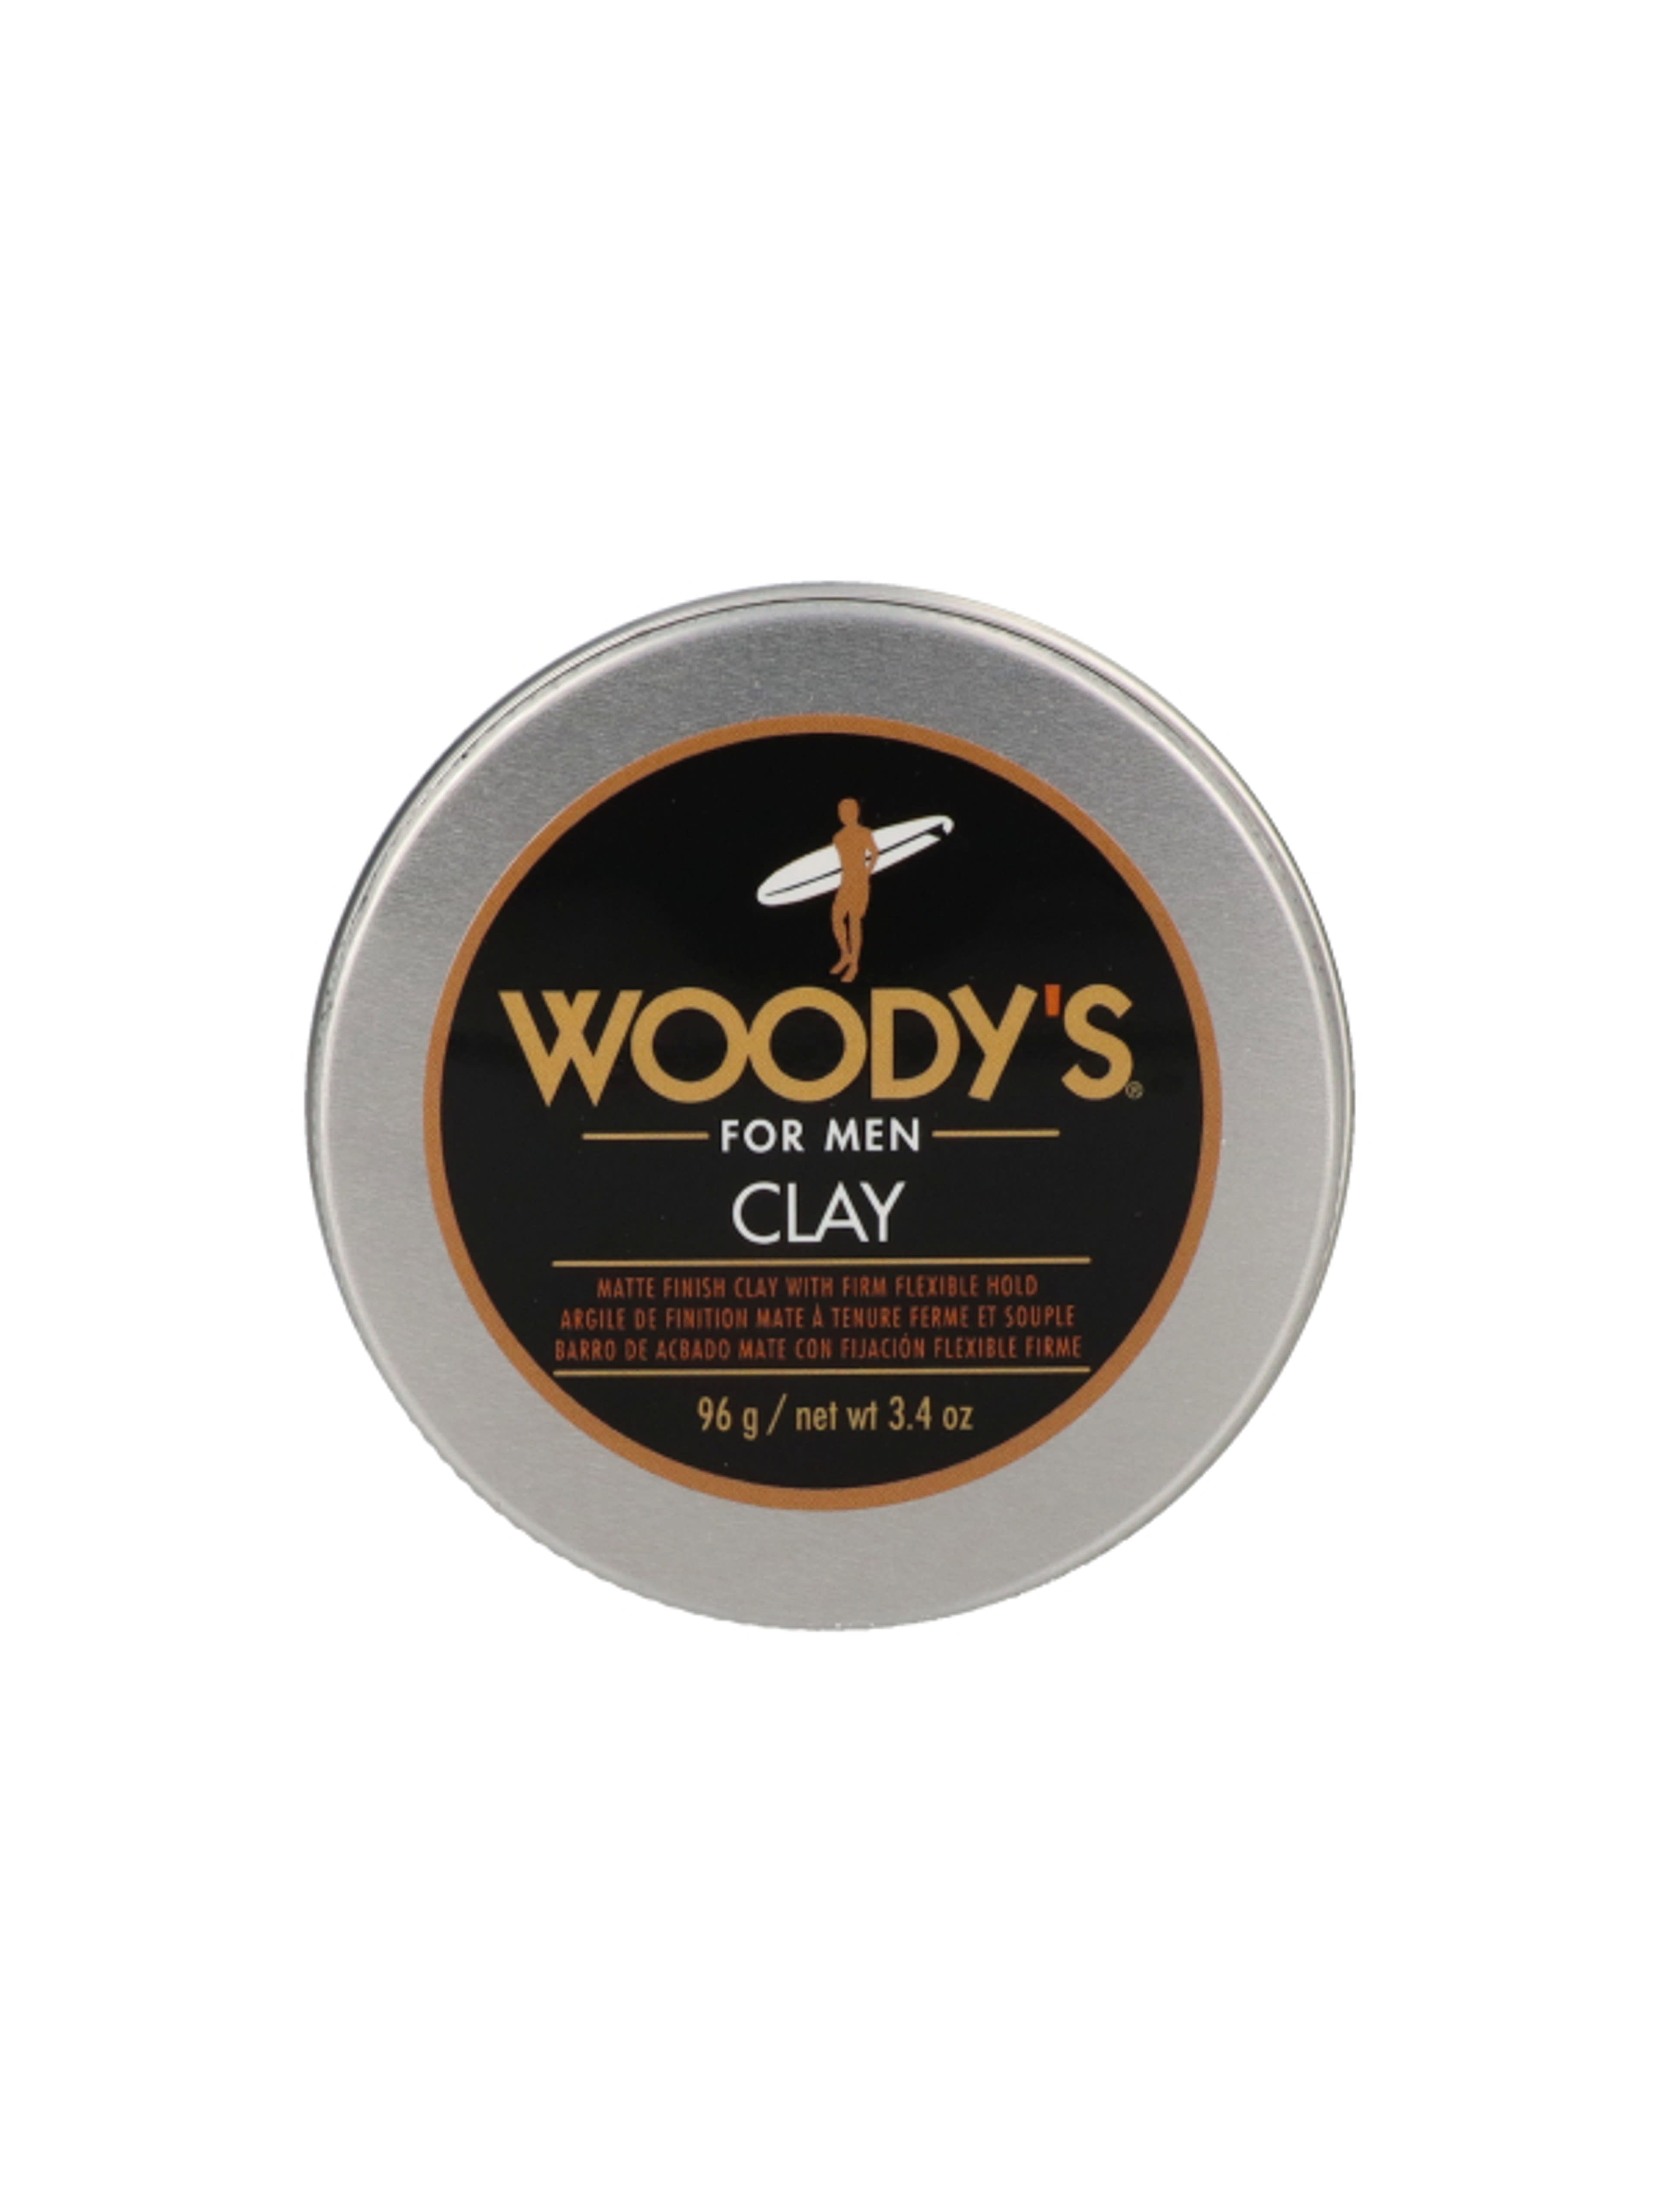 Woody's hajformázó clay - 96 g